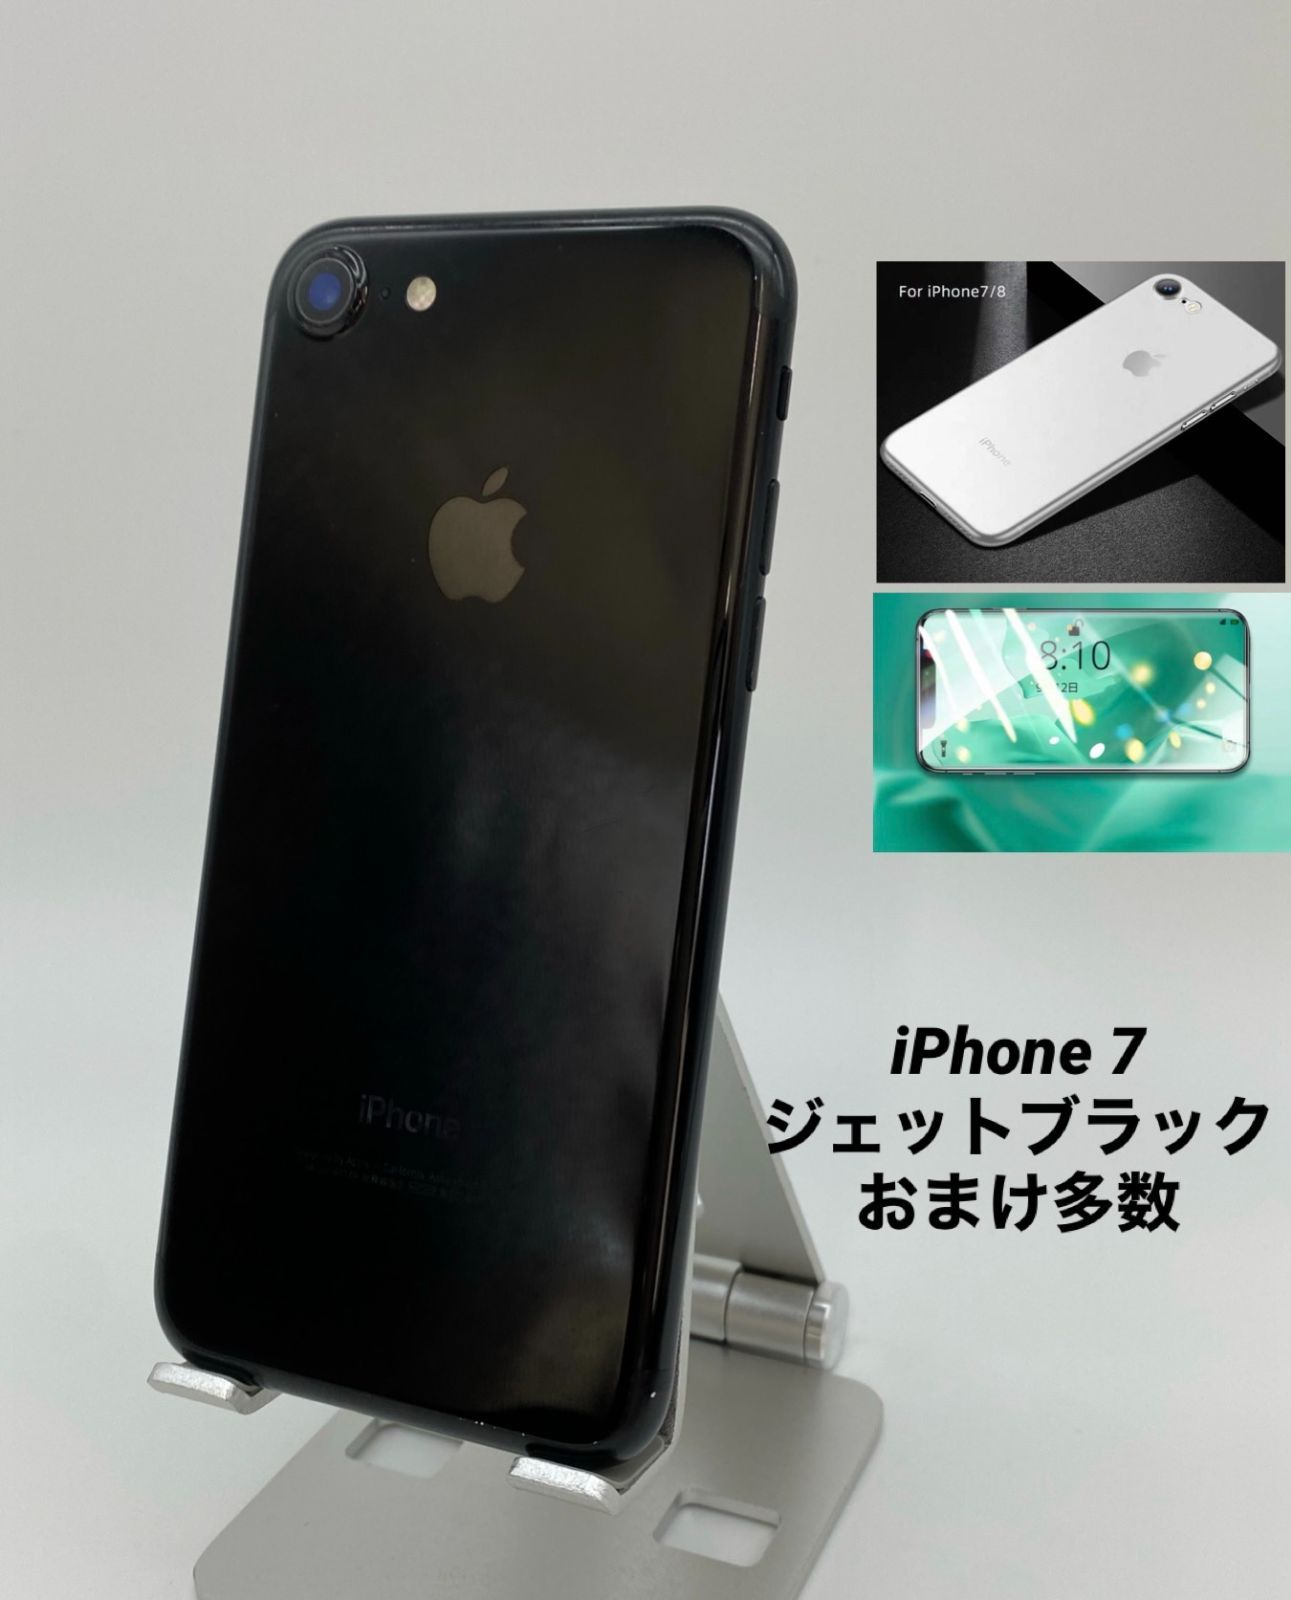 iPhone7 本体 32GB SIMフリー #136カラー - スマートフォン本体